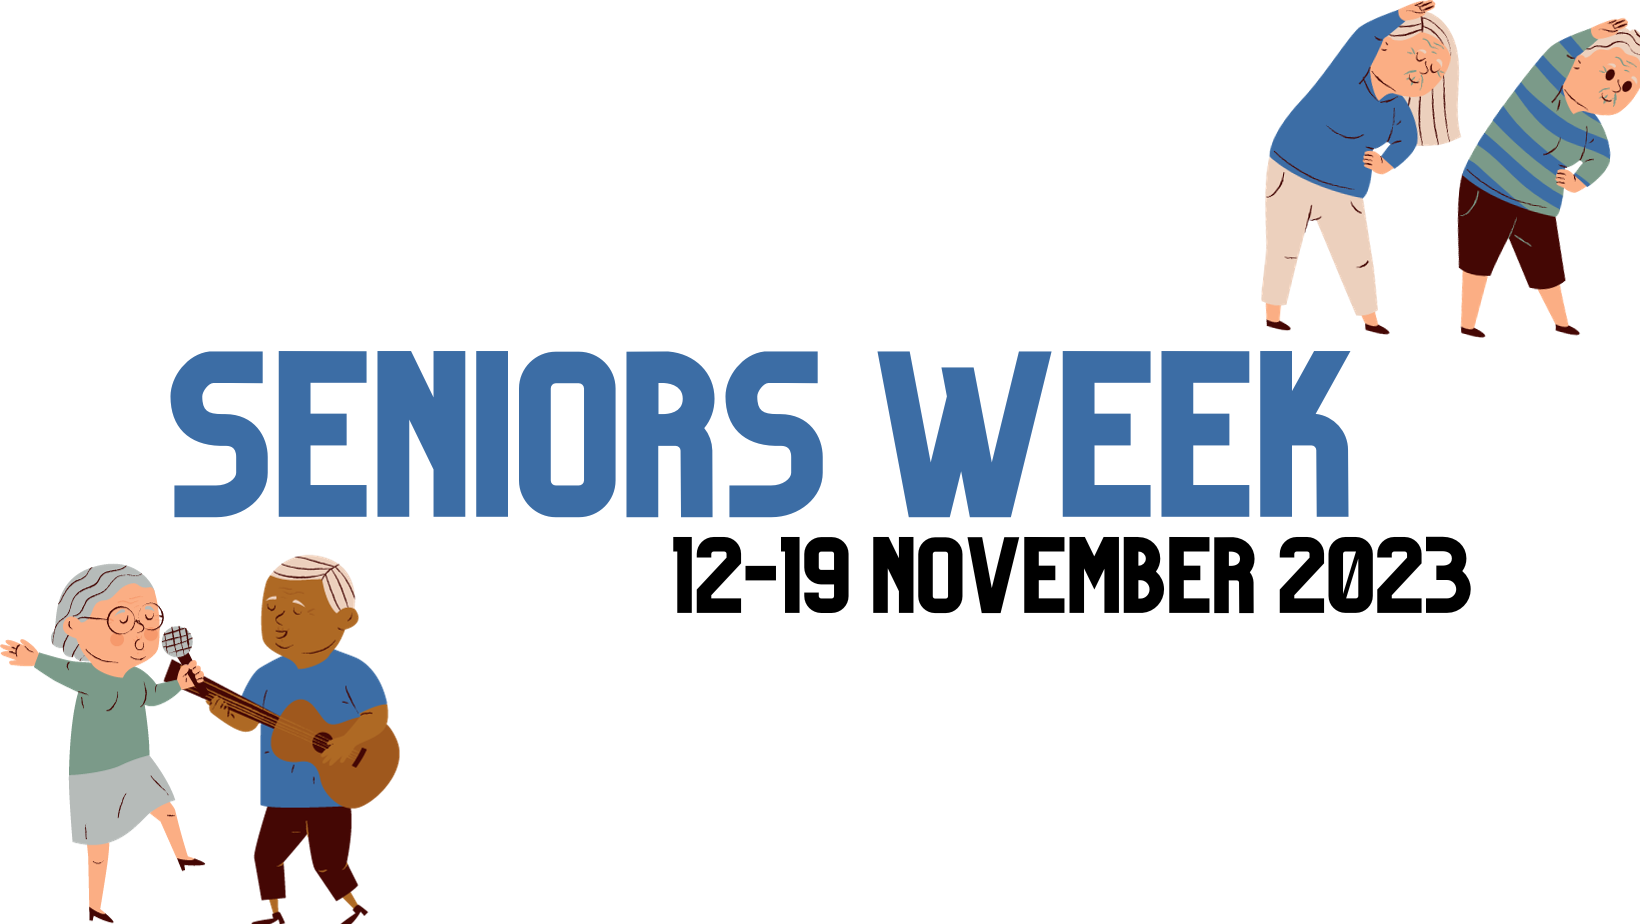 Get Involved in Seniors Week 2023 from 12-19 November